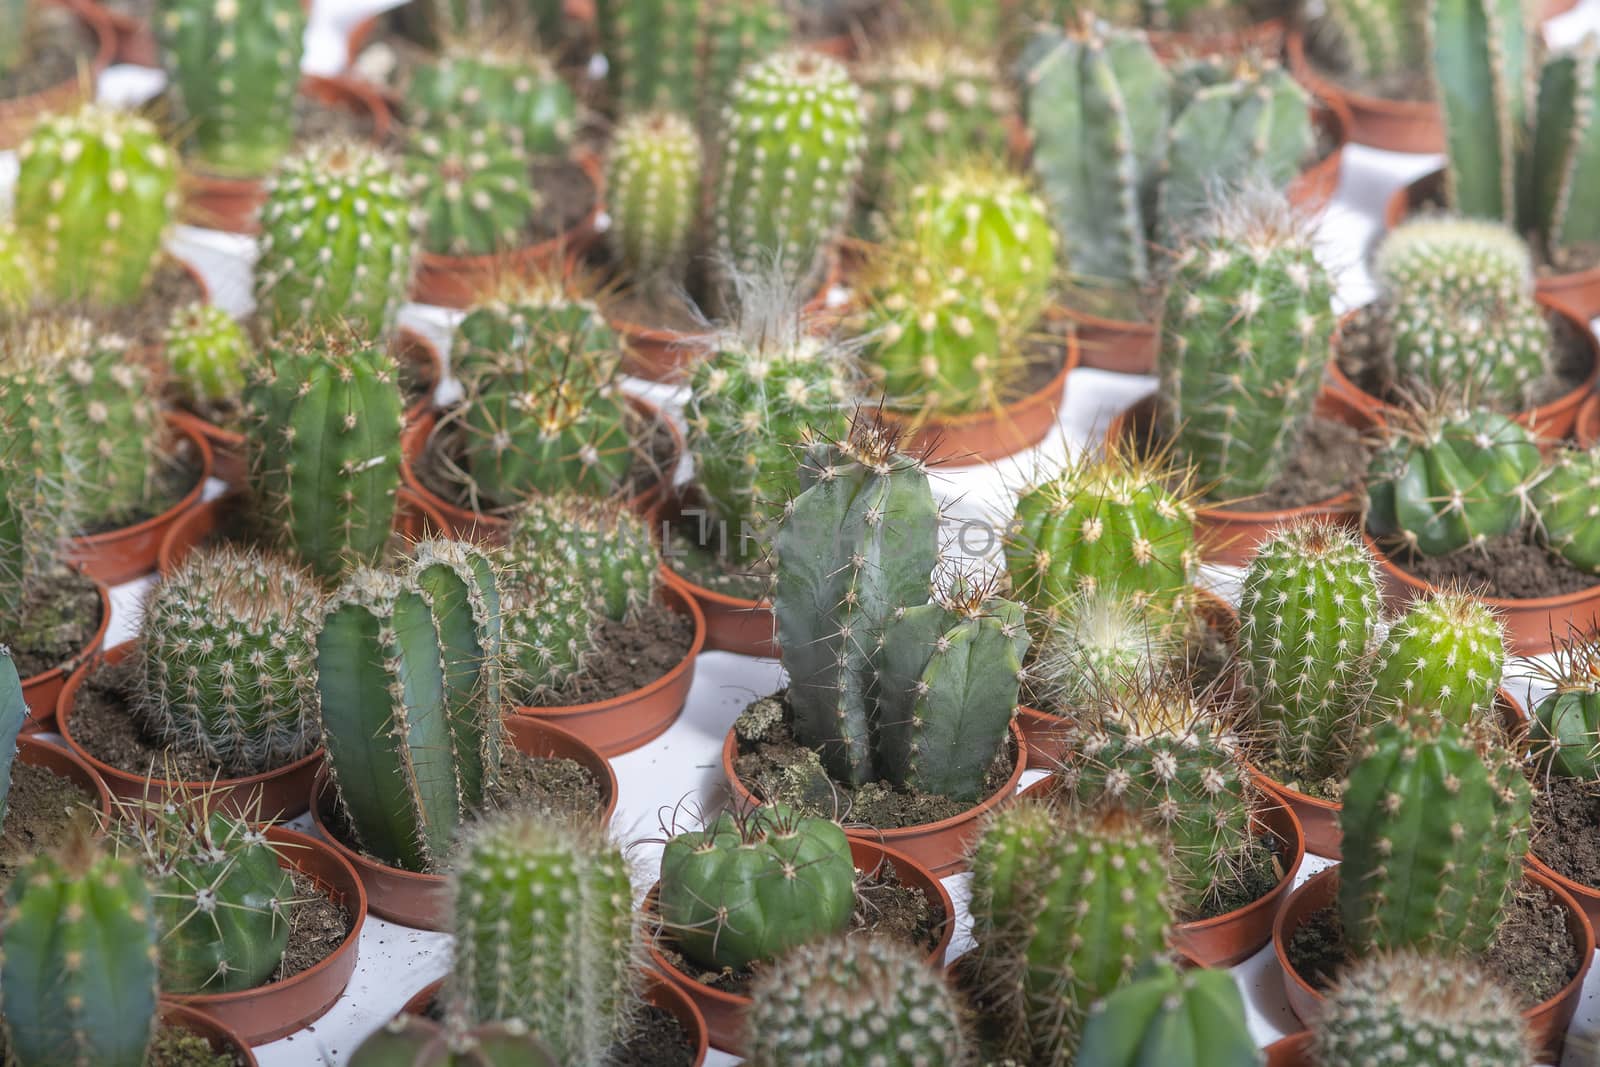 Succulent cactus plants in pots. Spring garden series, Mallorca, Spain.